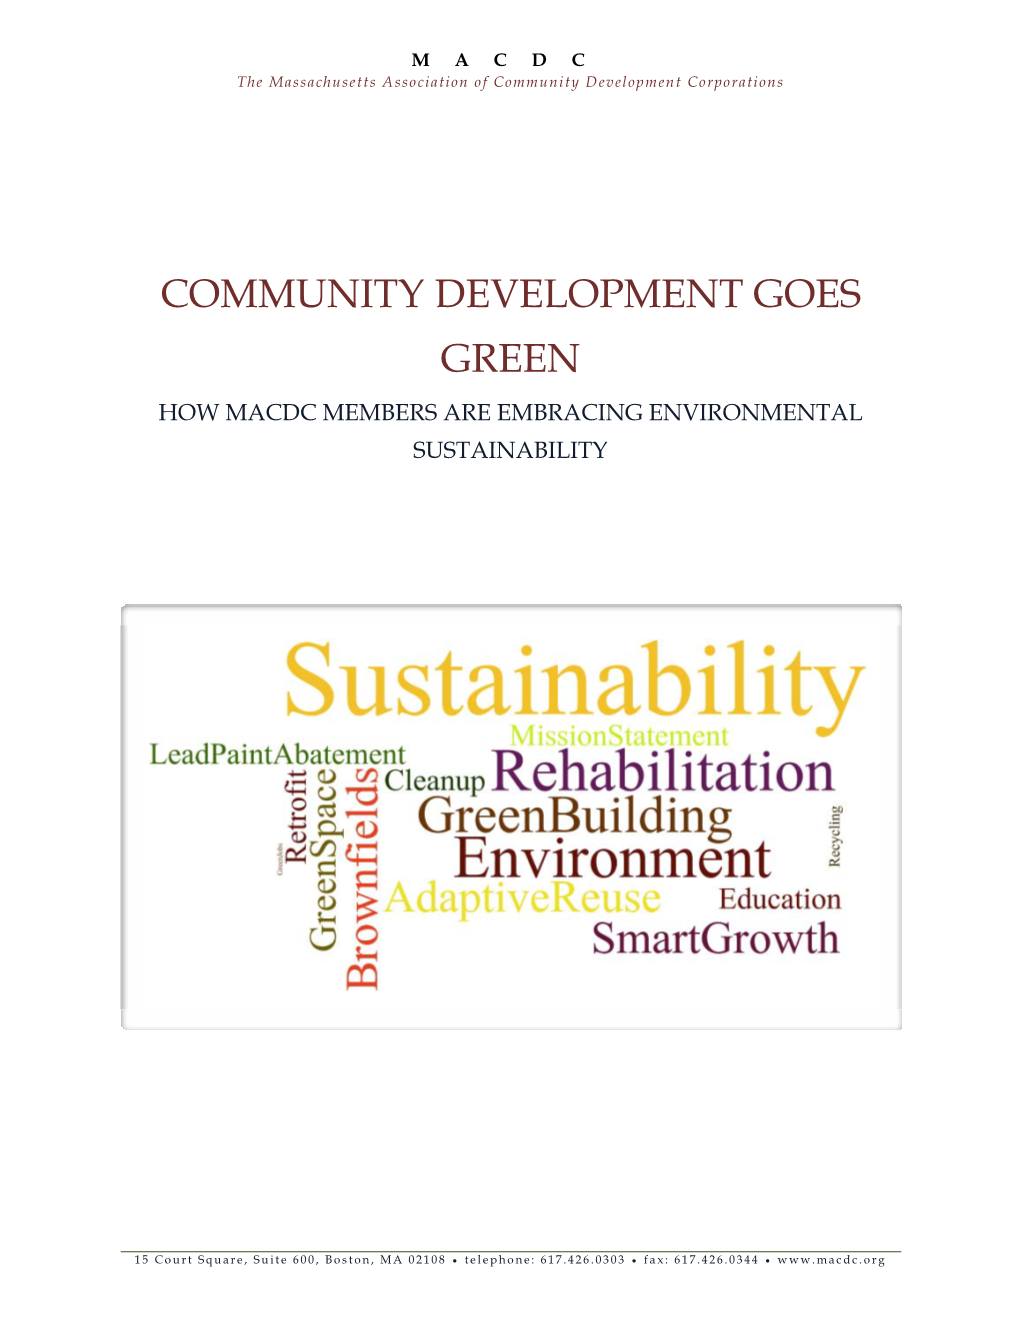 MACDC Green Cdcs Report 2010